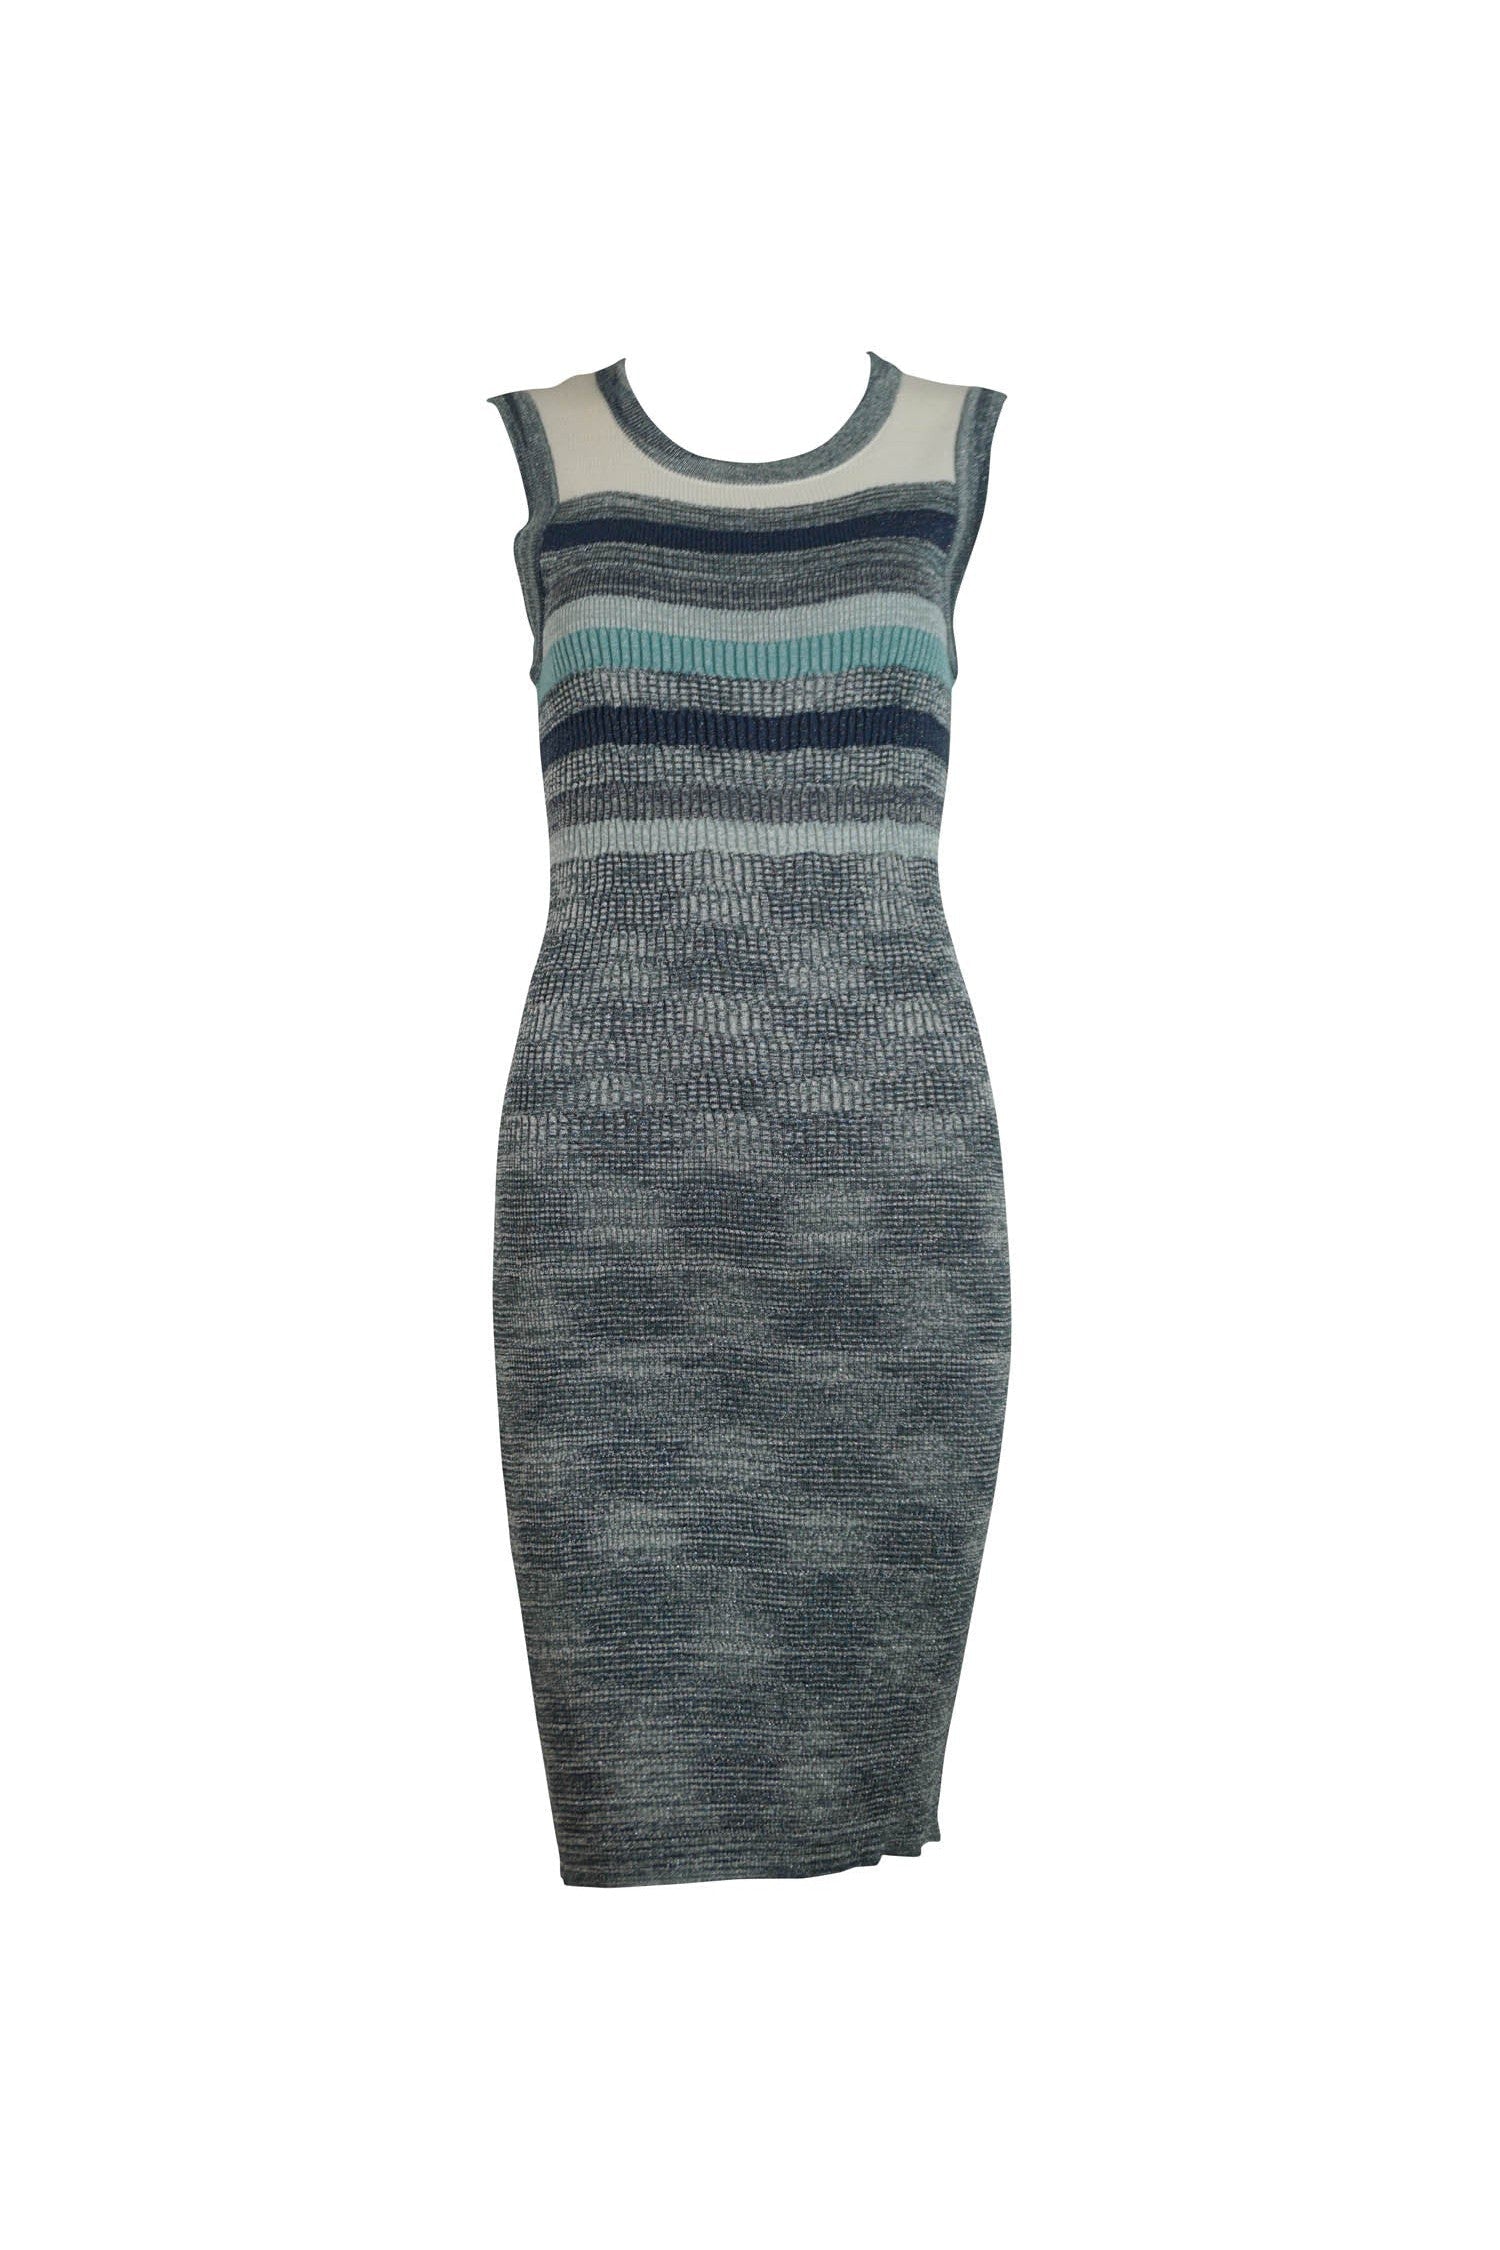 Chanel Rib Knit Tank Dress Spring 2012